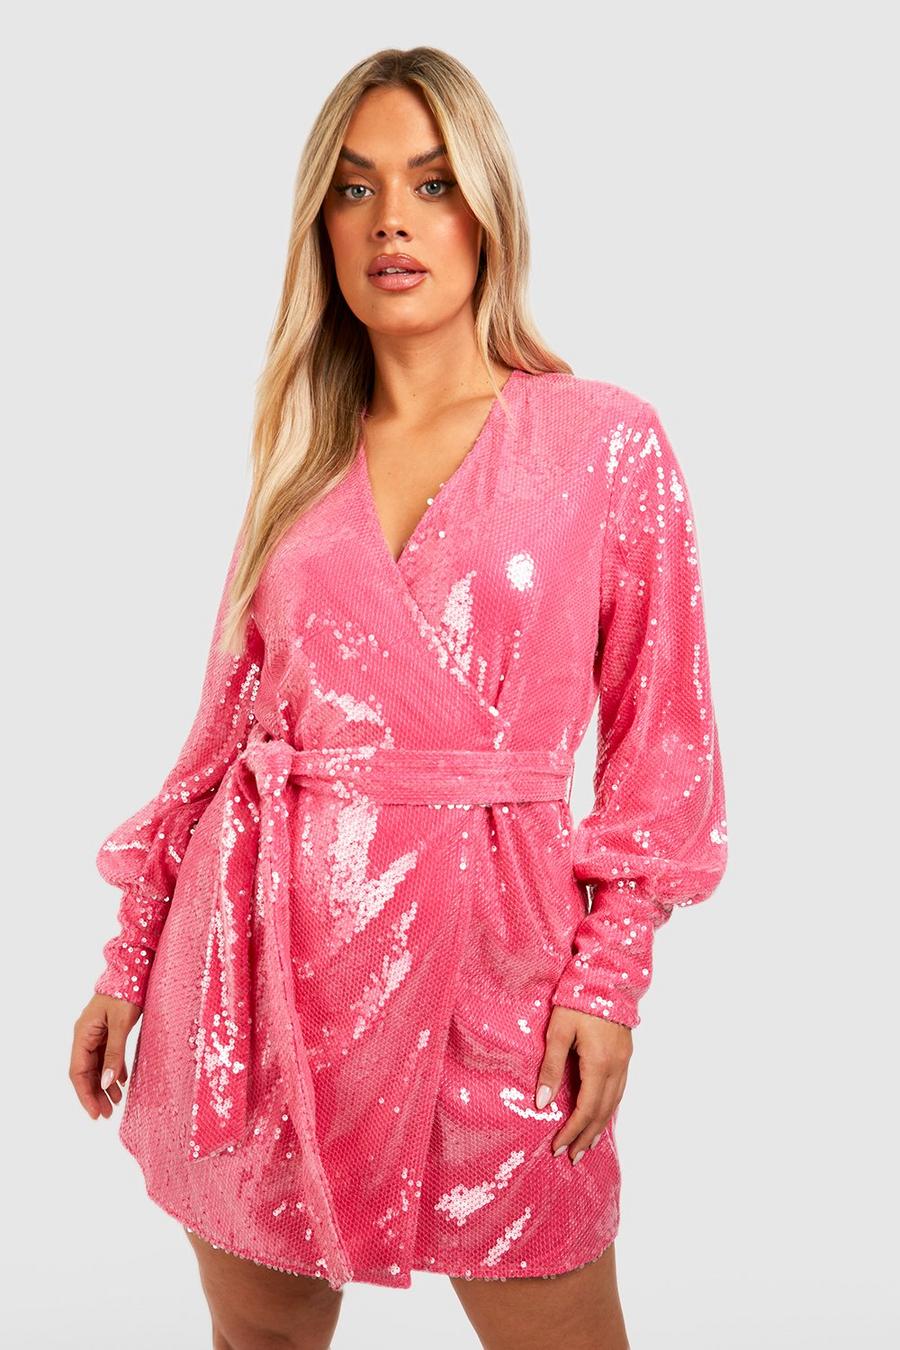 Grande taille - Robe portefeuille à paillettes, Hot pink